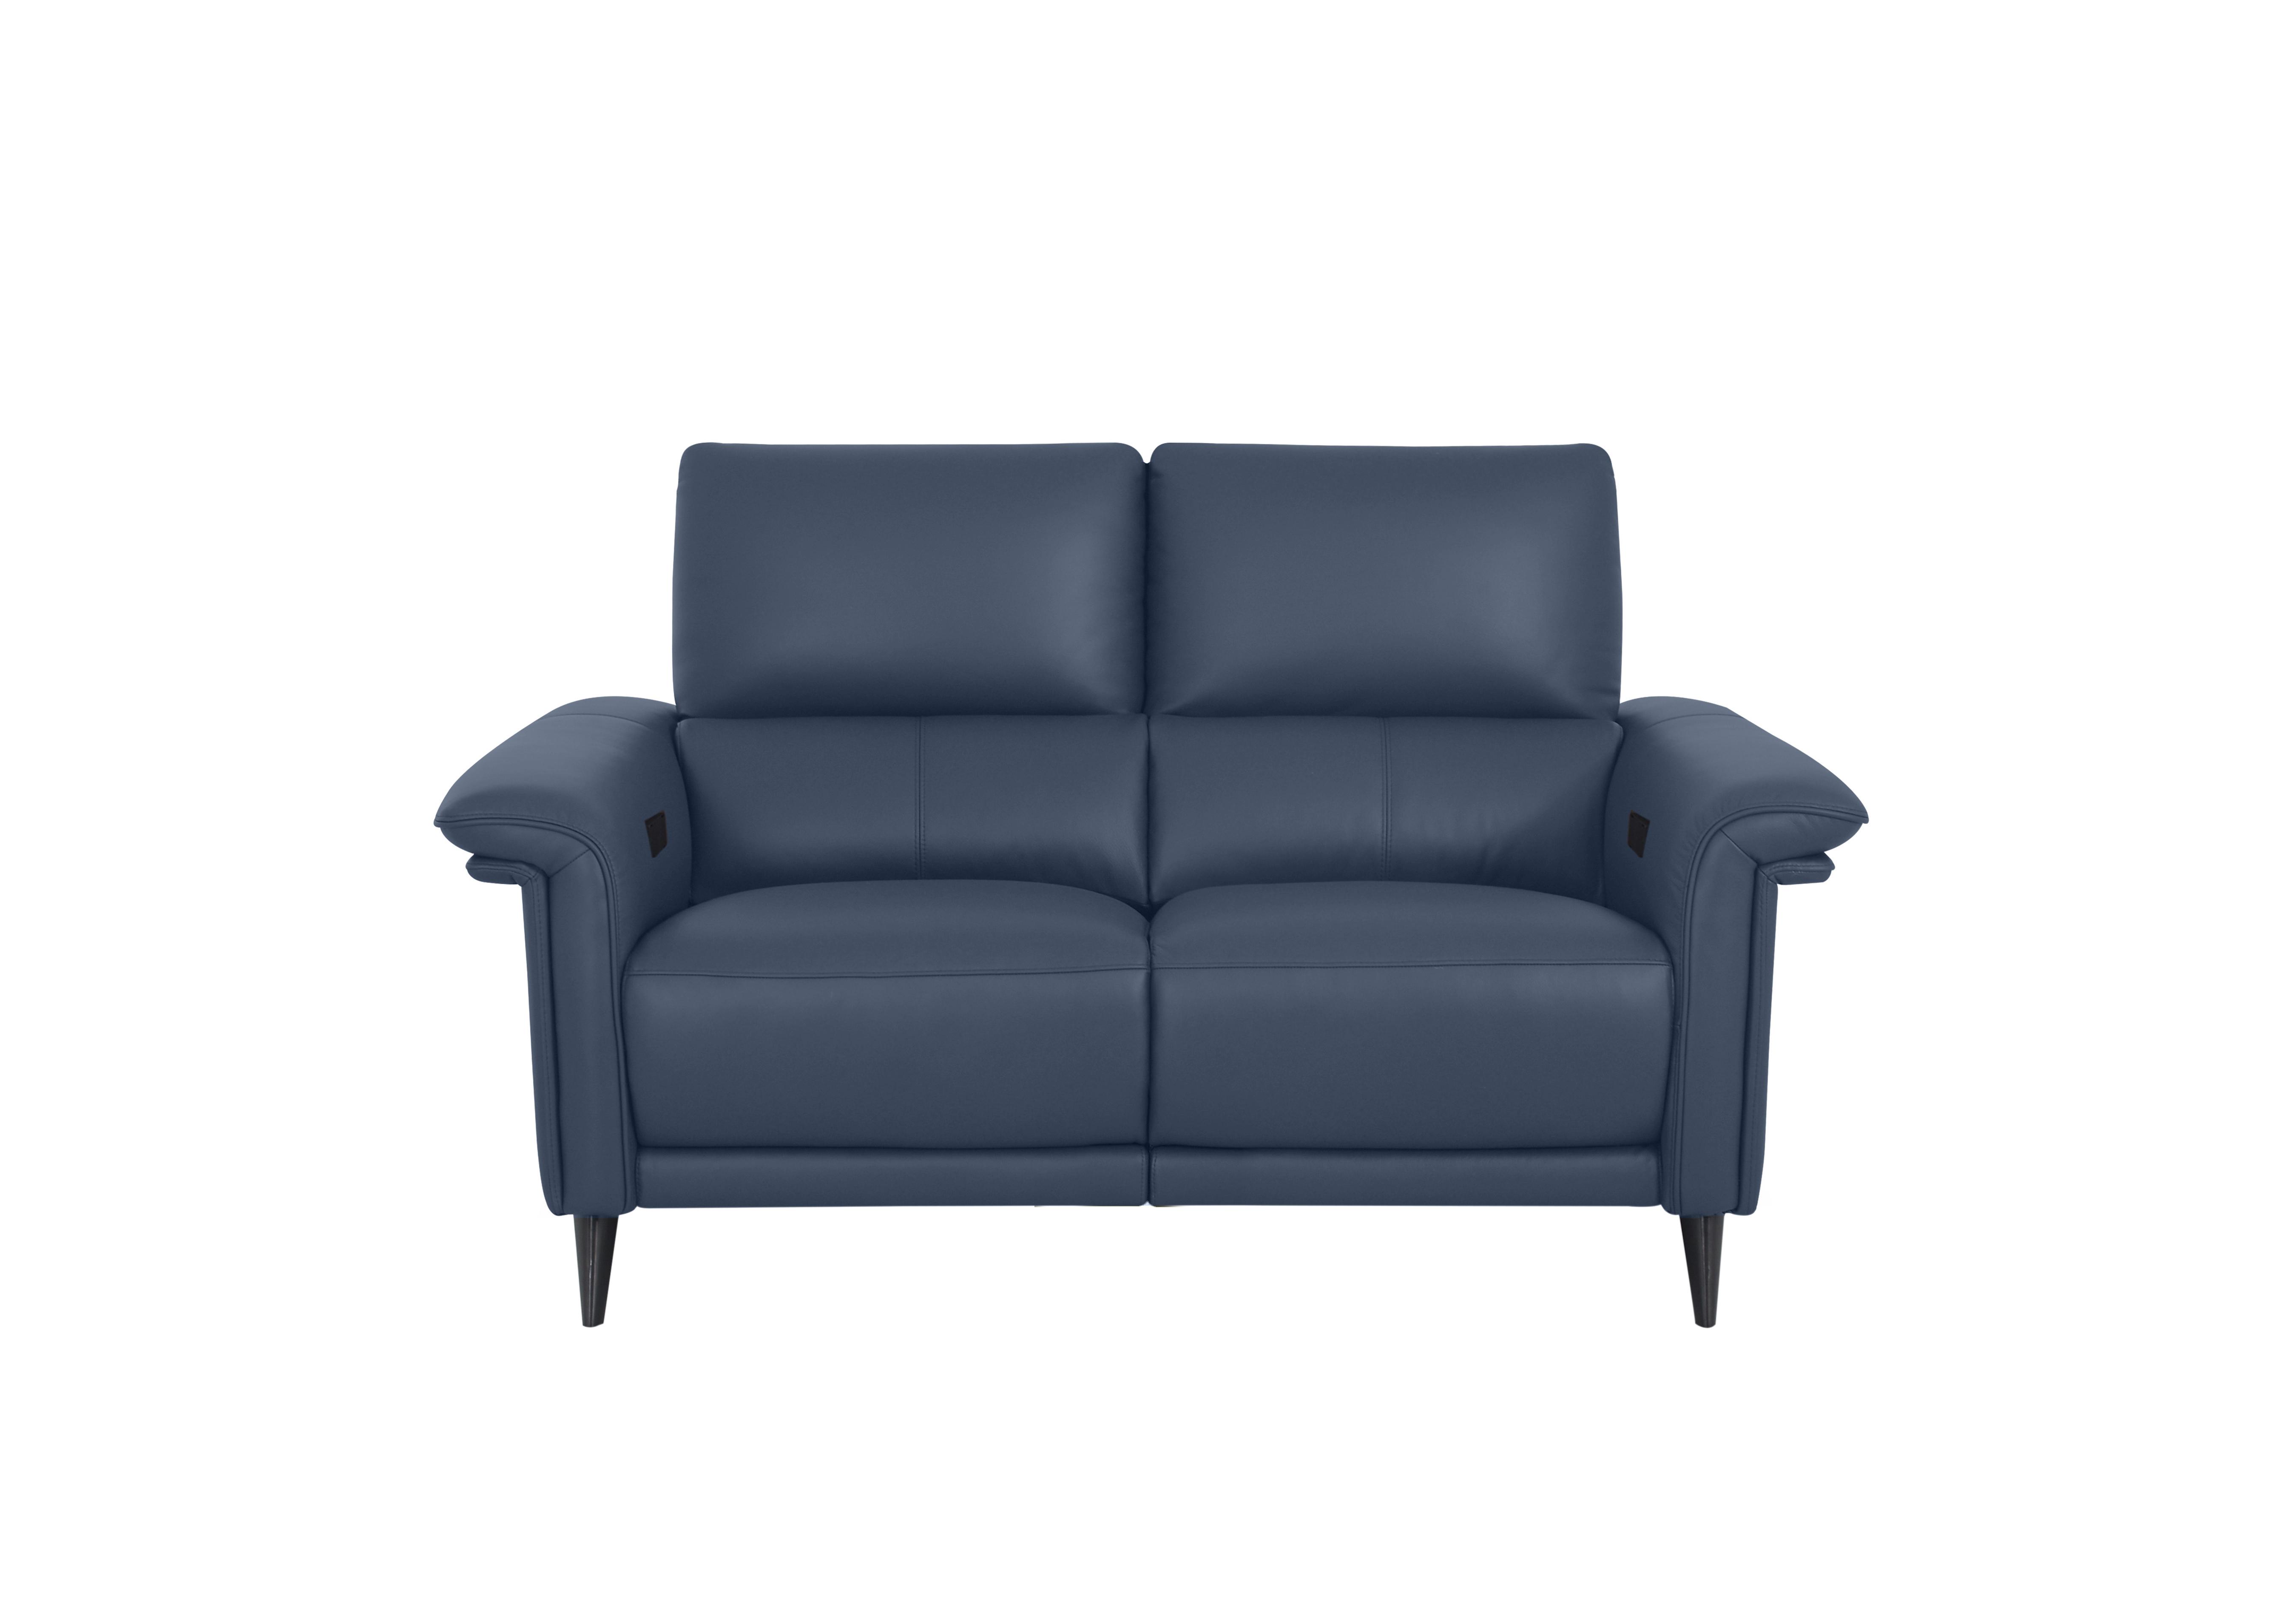 Huxley 2 Seater Leather Sofa in Nn-518e Ocean Blue on Furniture Village